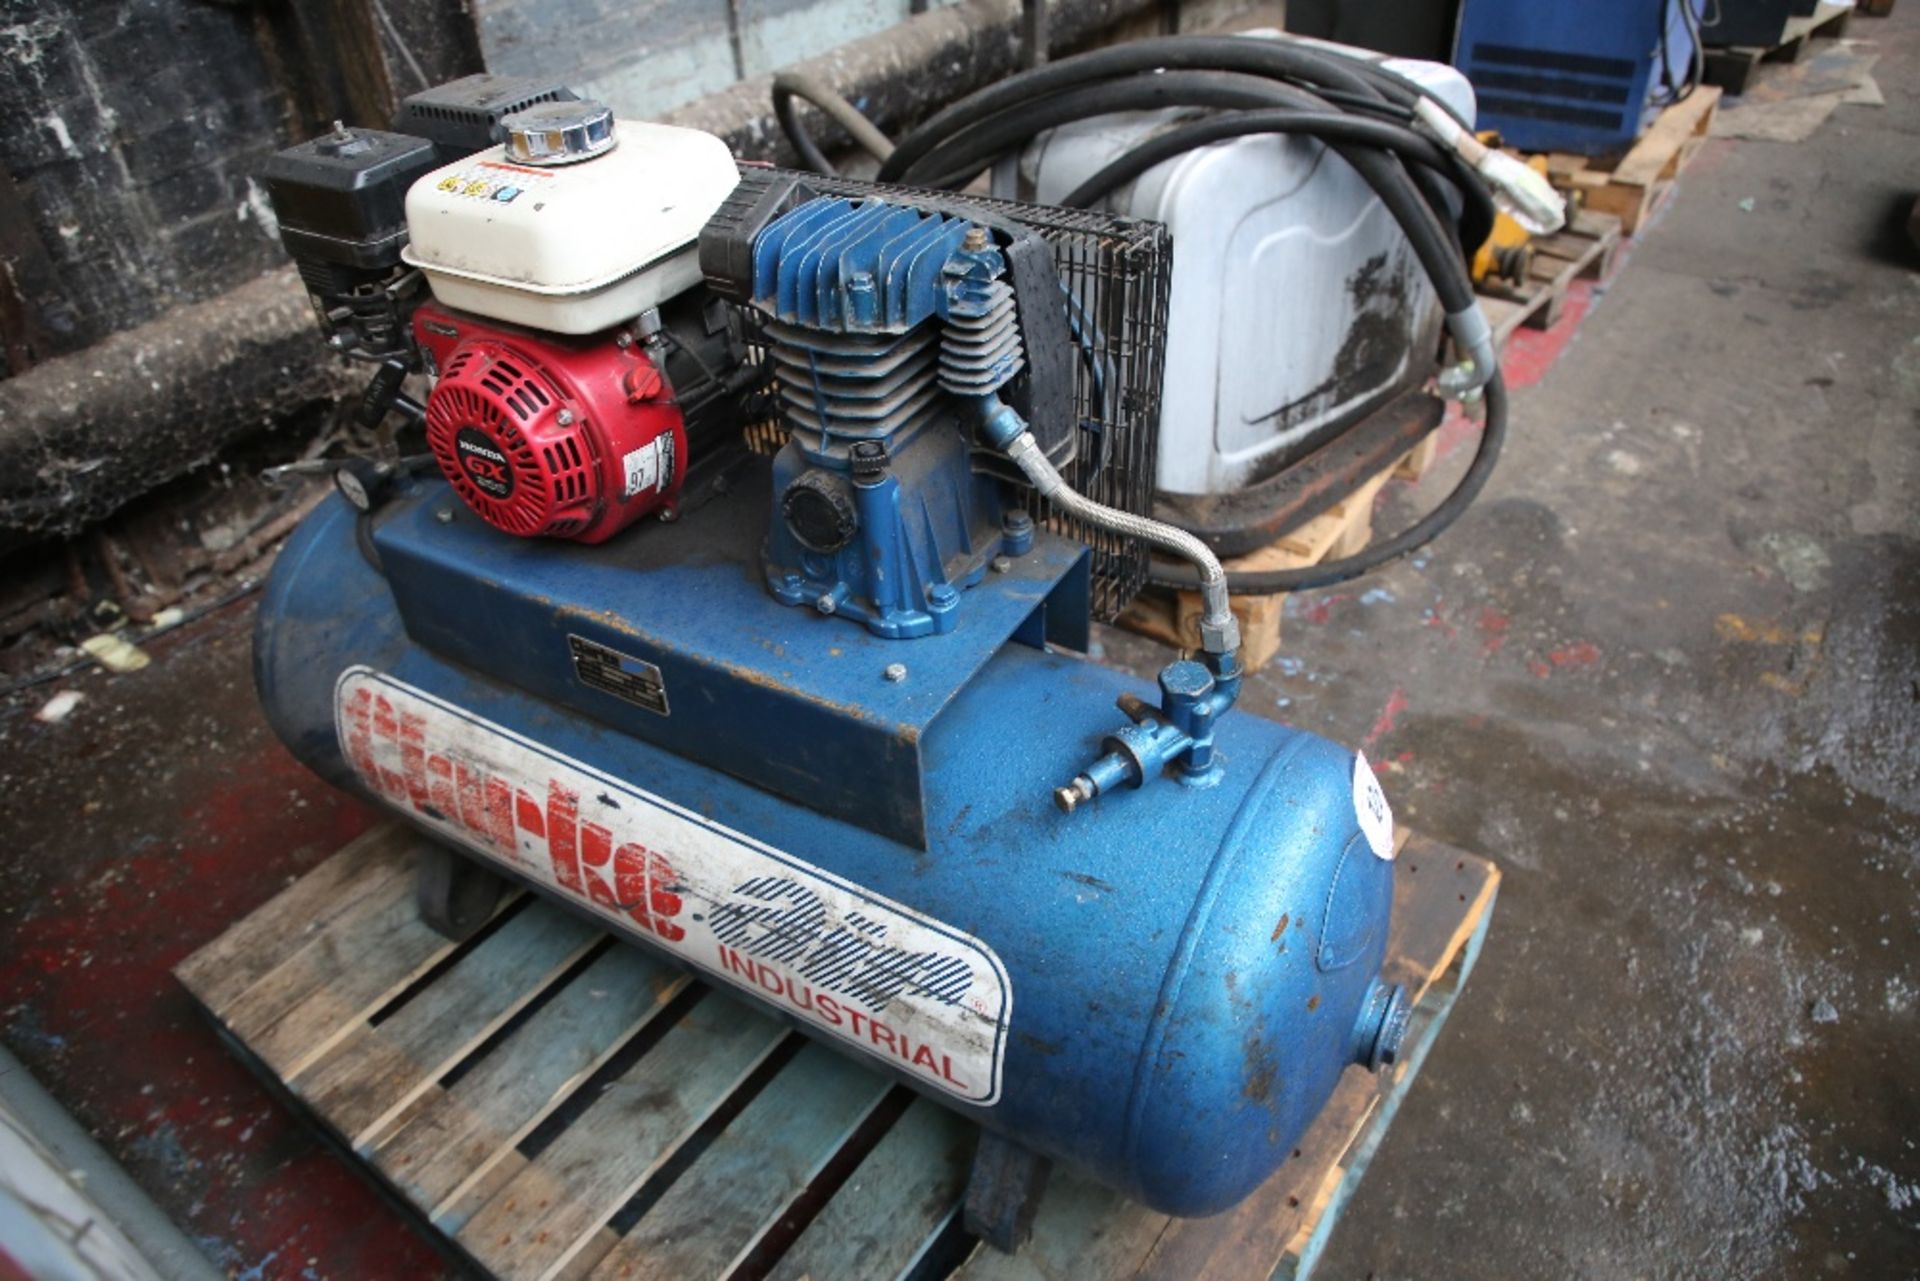 Clarke SP15 ND150 Petrol Air Compressor (1 of) (Year 2010) S/N: 82112, Honda GX200 Engine (Pulls - Image 3 of 6